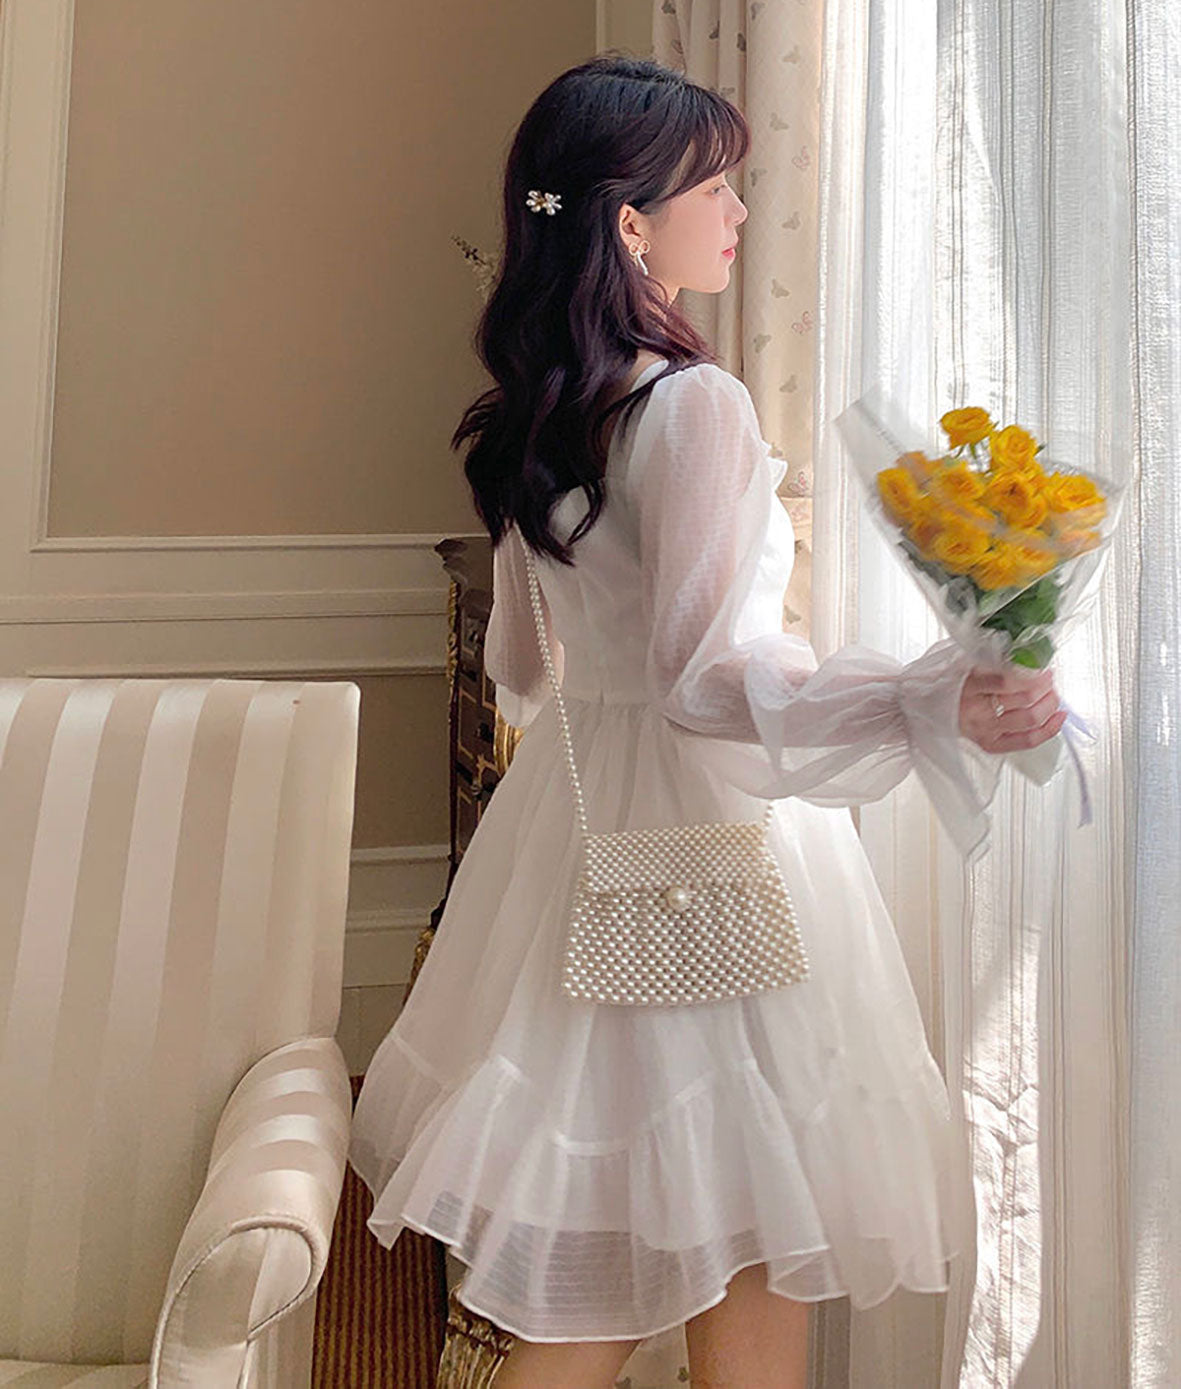 Adult Princess Dress | White Wedding Dress